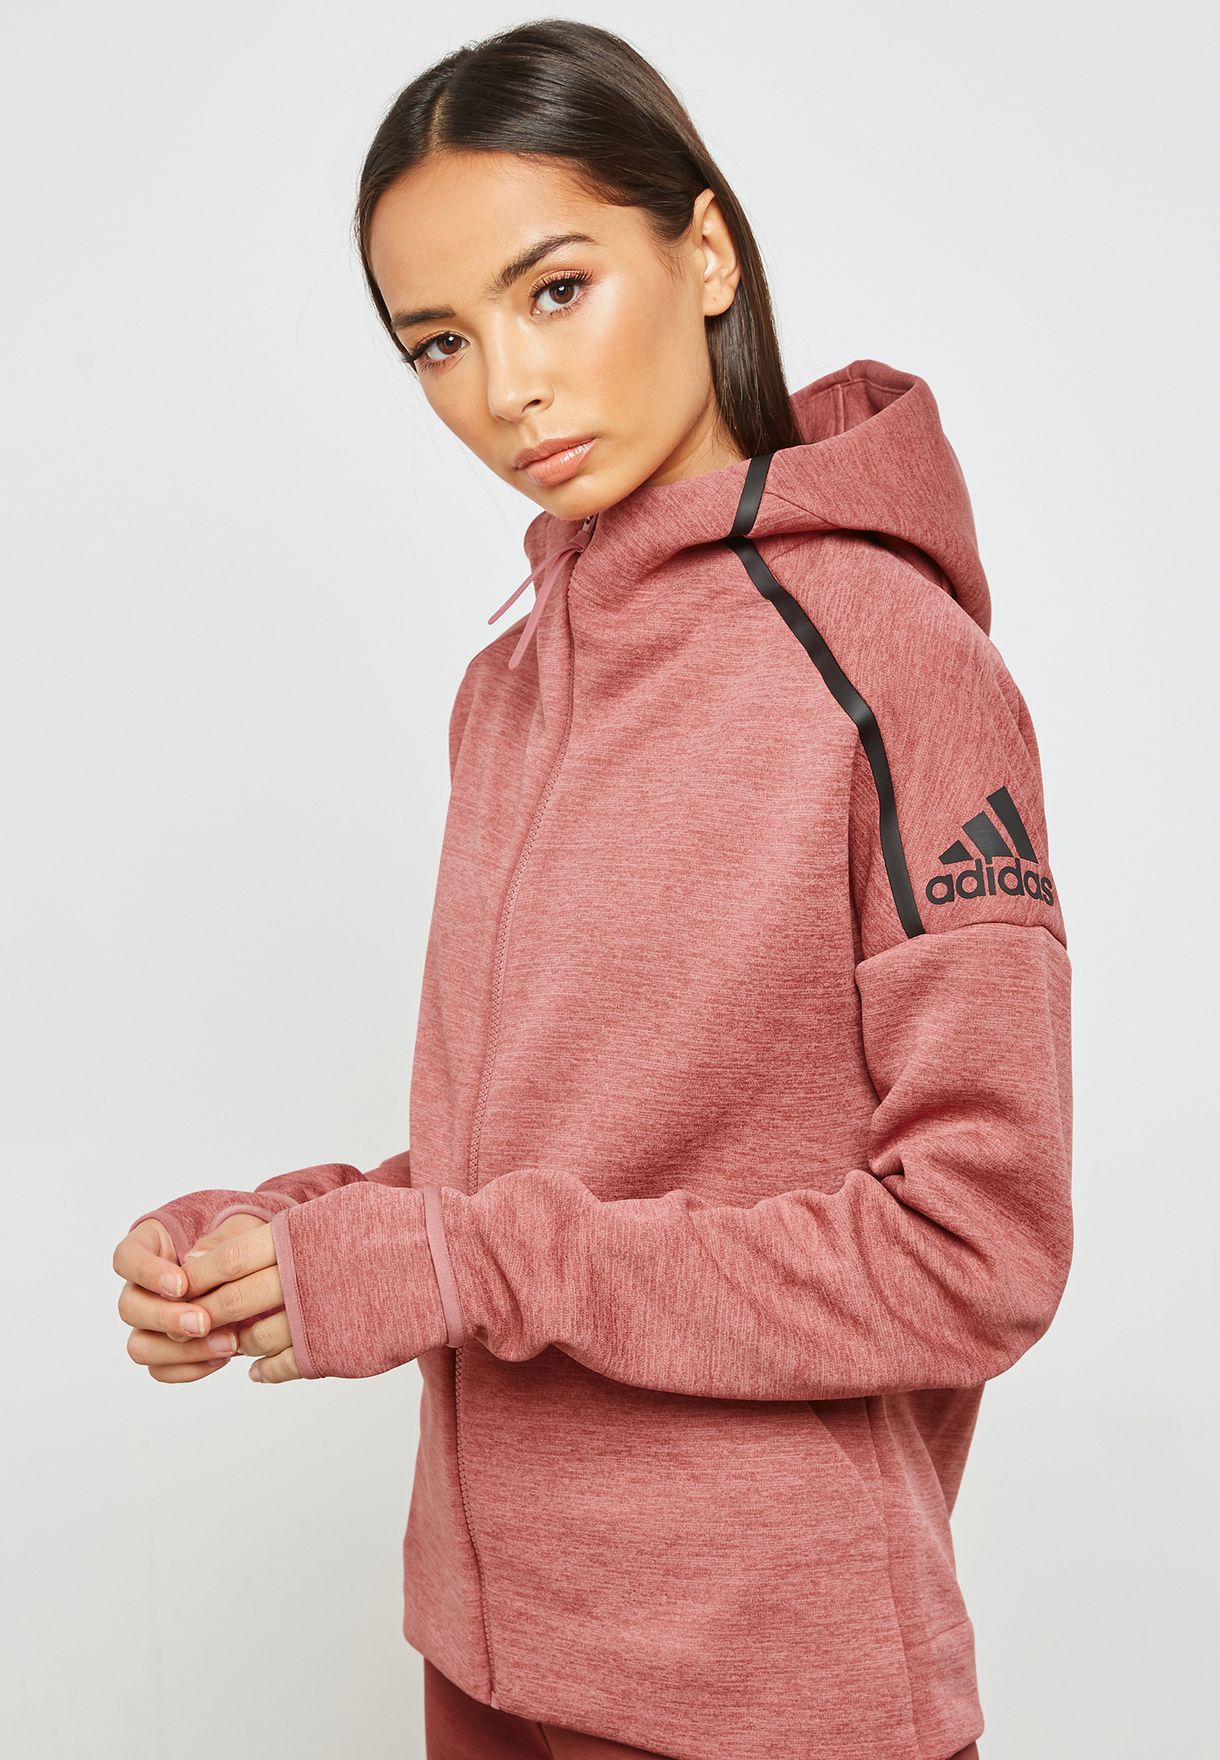 adidas pink and grey hoodie